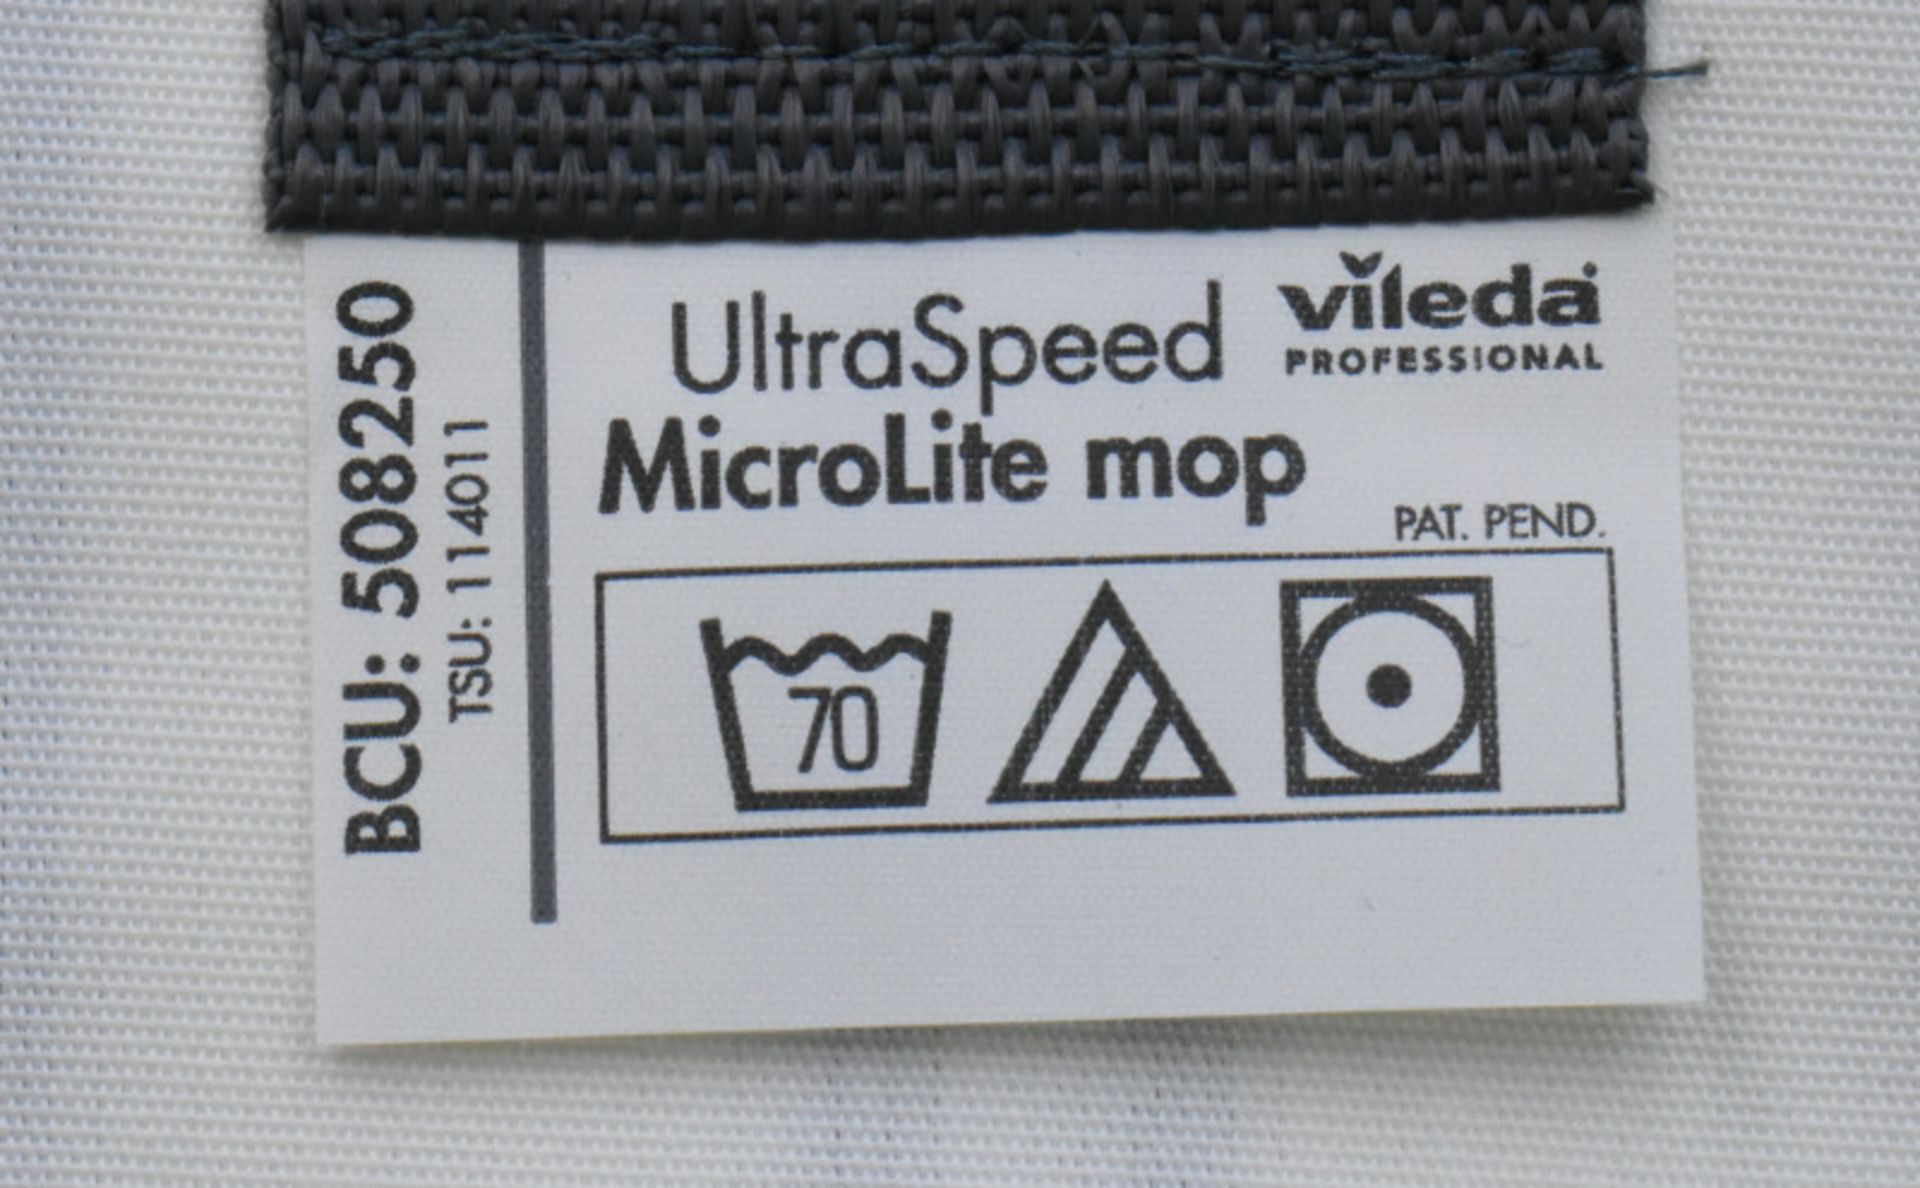 20 x Vielda UltraSpeed Microlite Mop- Brand New Or Minor Use - Image 2 of 2